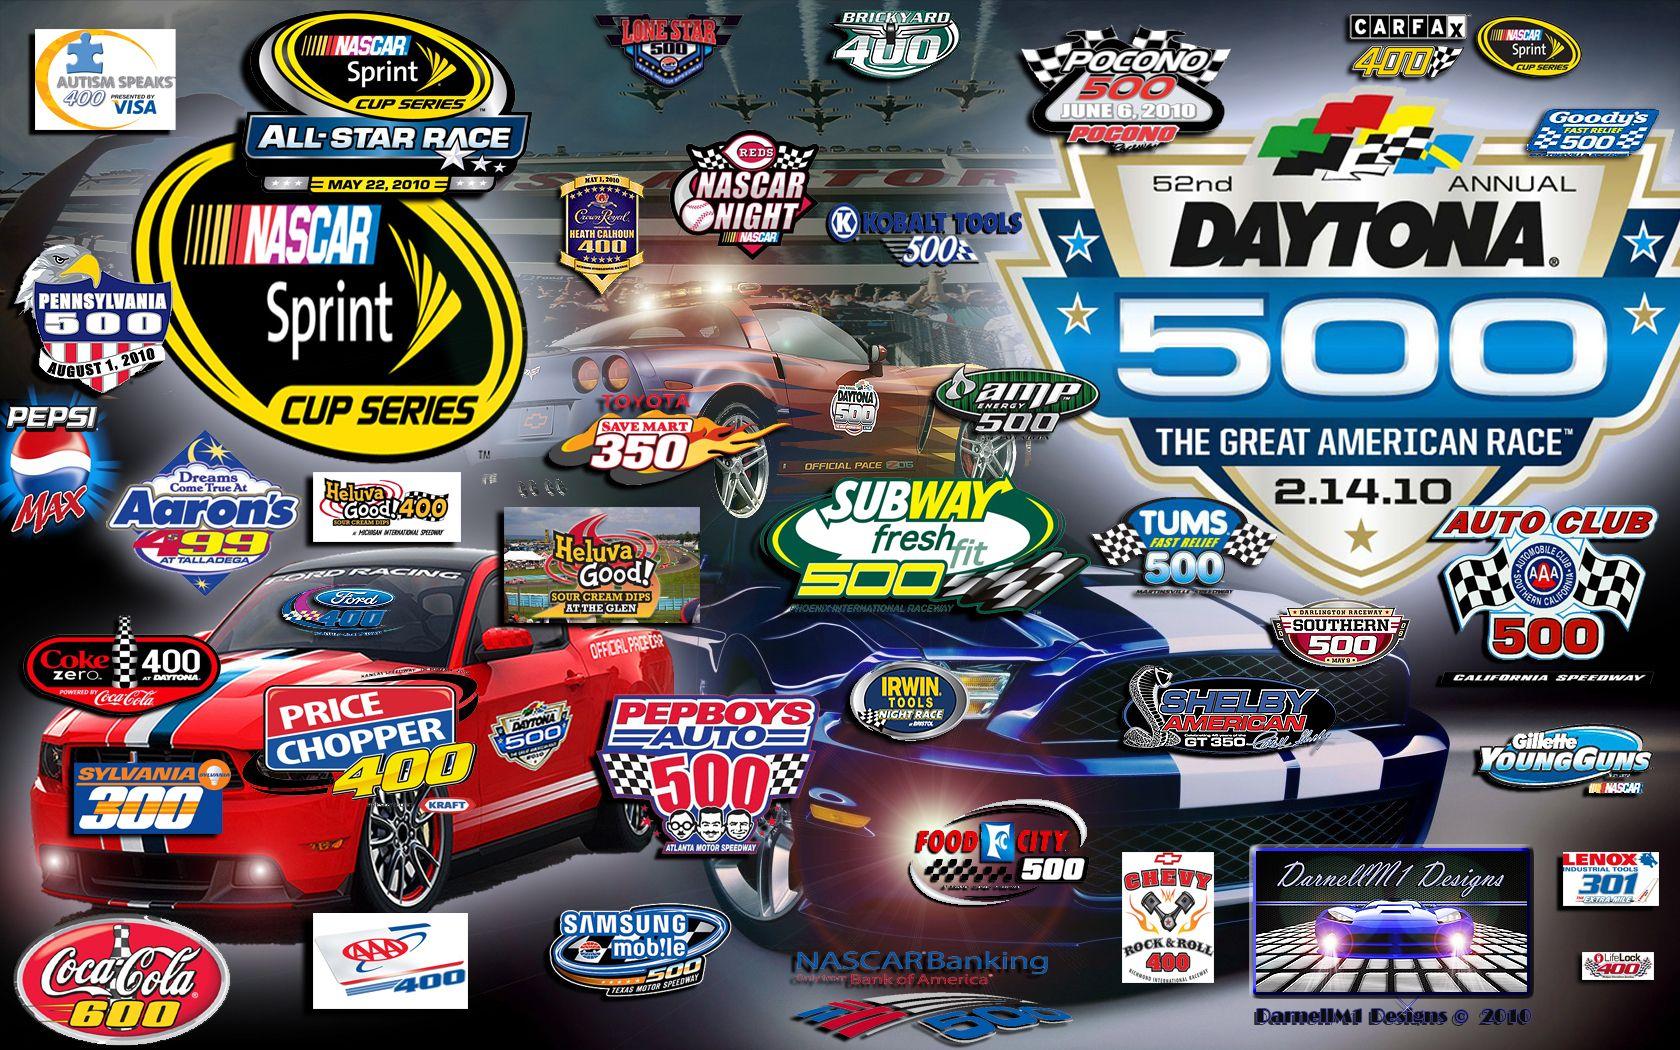 Official NASCAR Sponsors Logo LogoDix